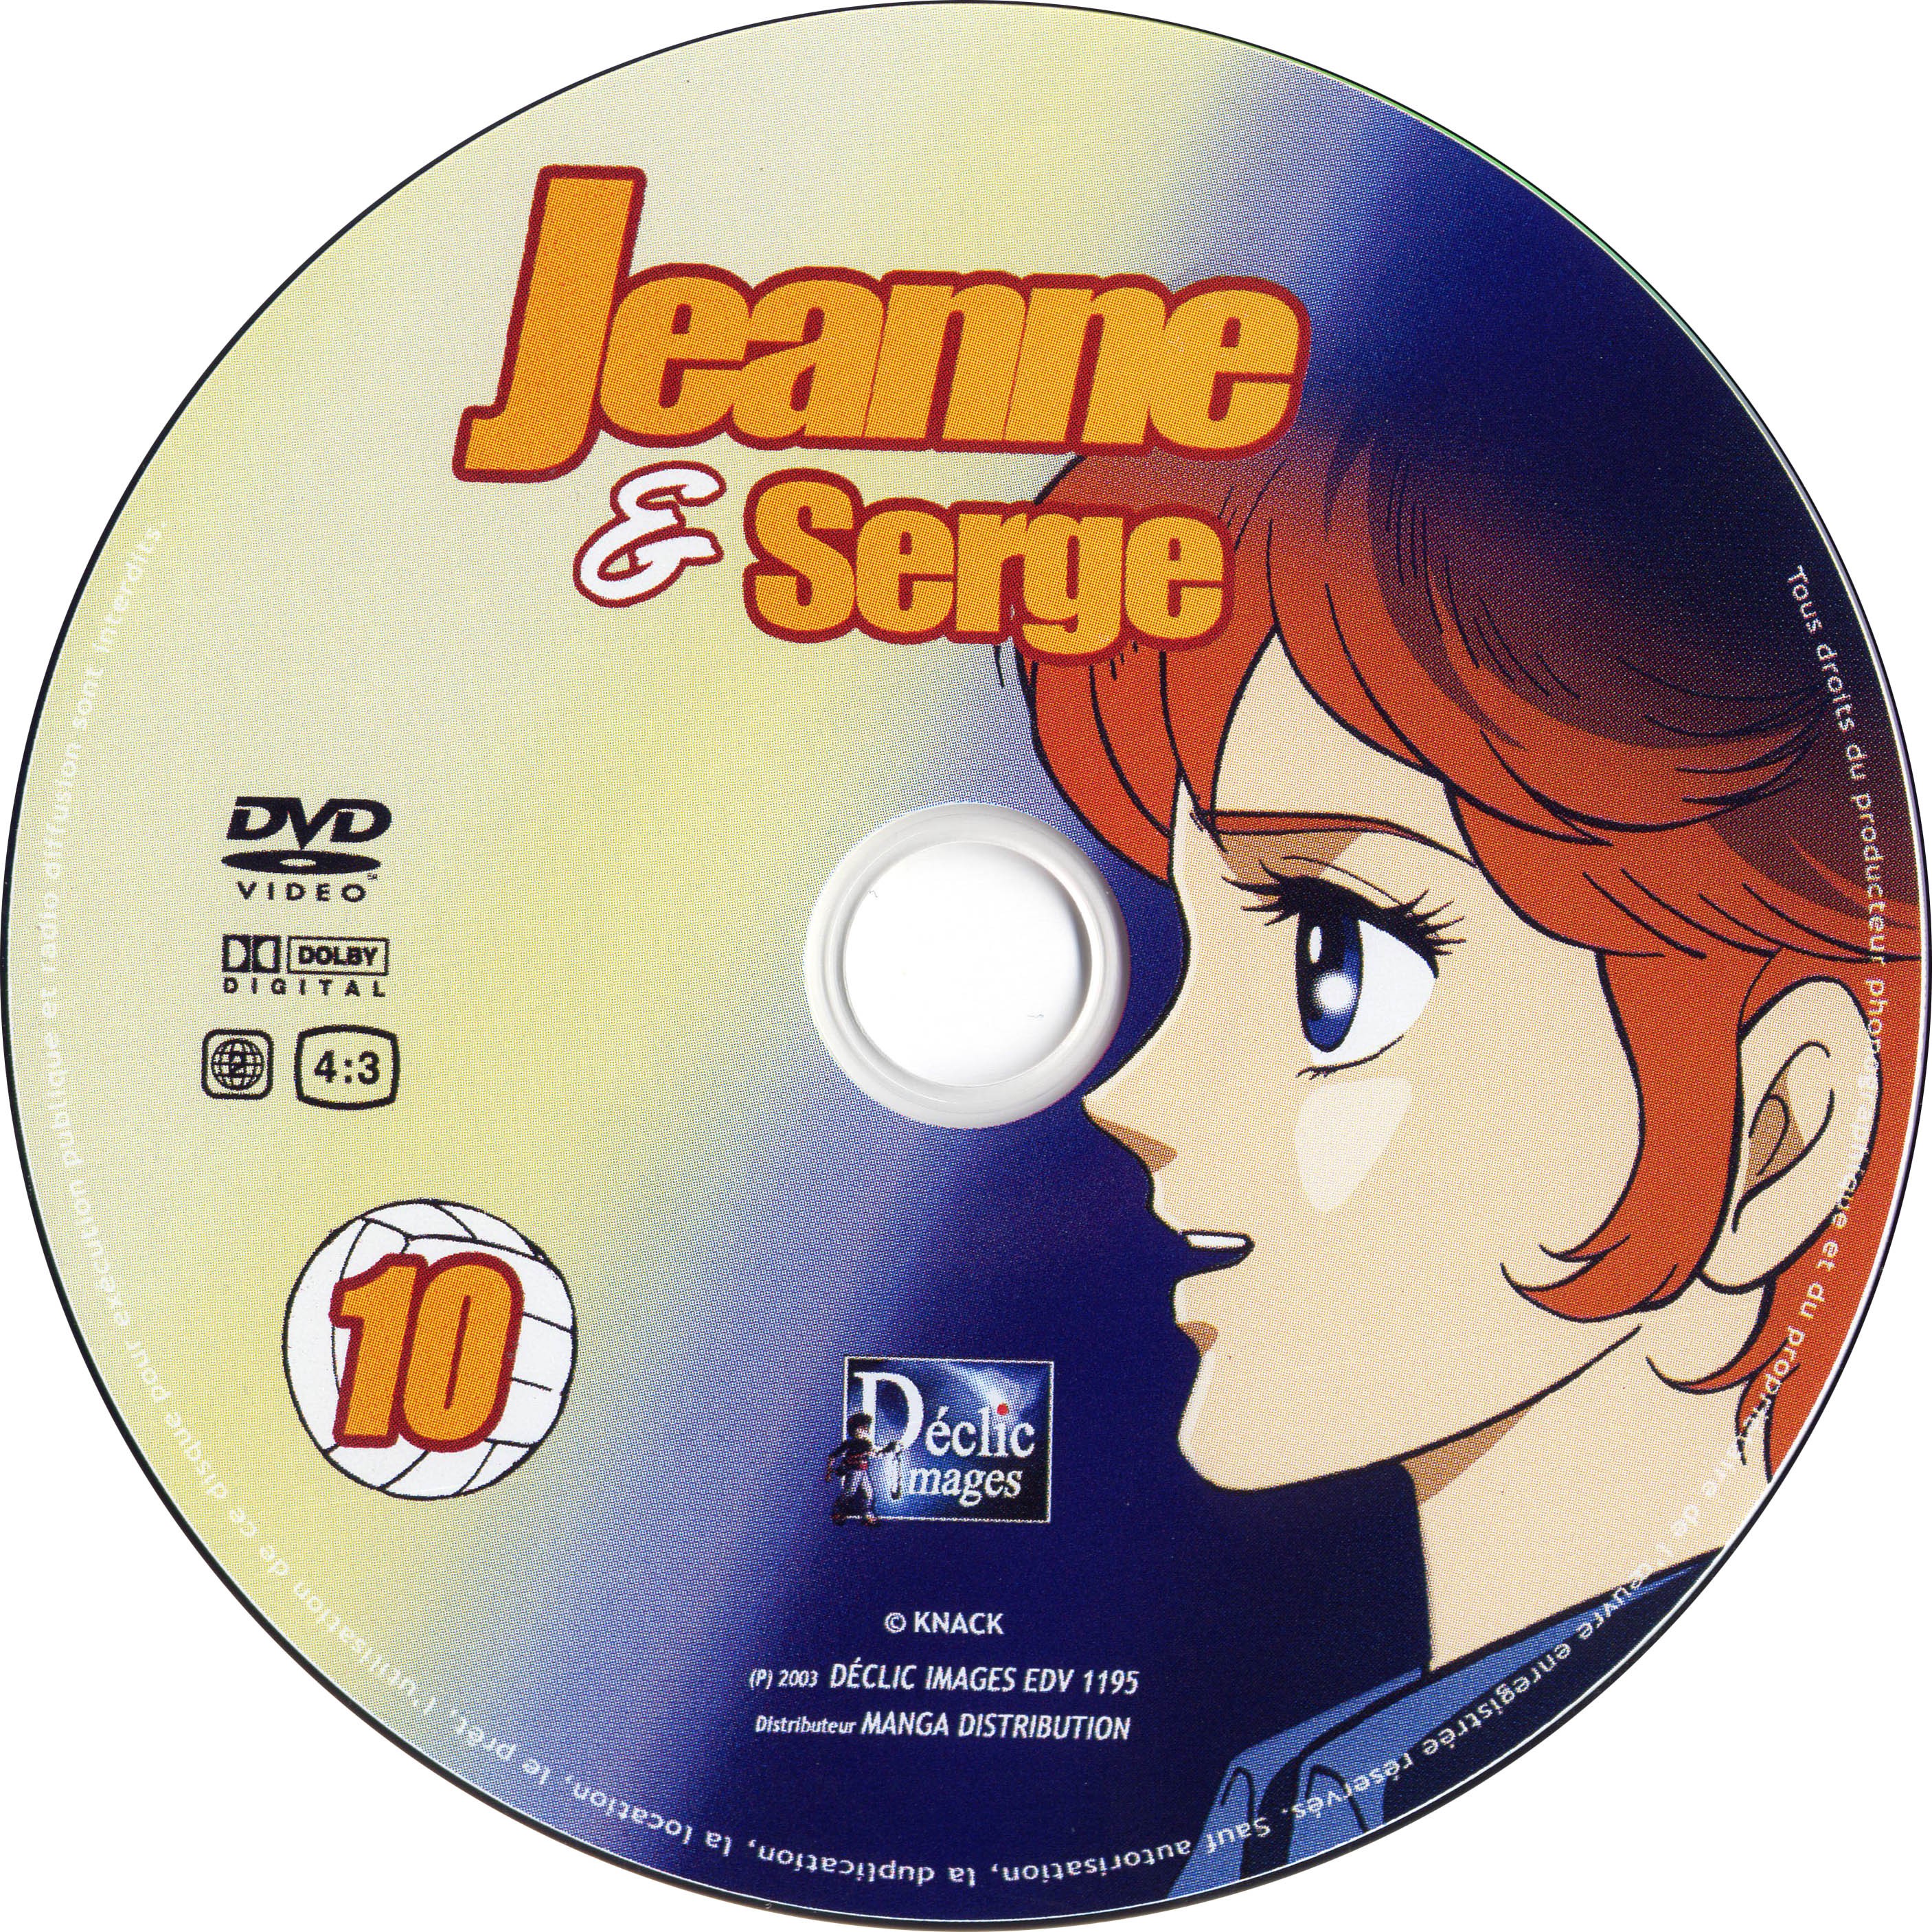 Jeanne et Serge vol 10